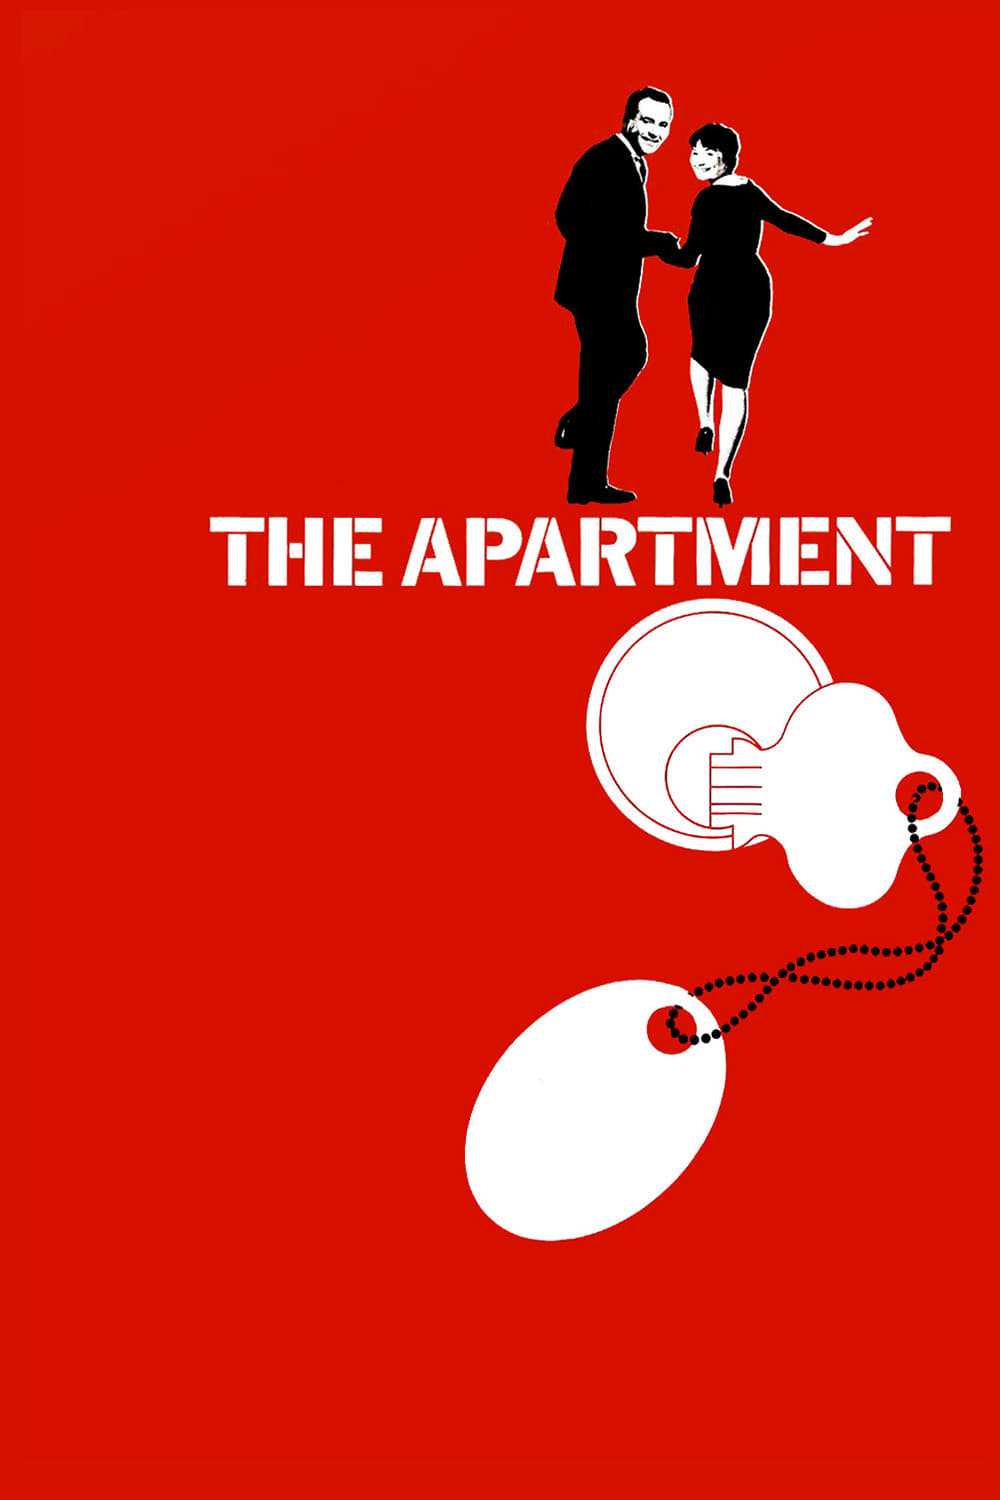 Căn hộ - The apartment